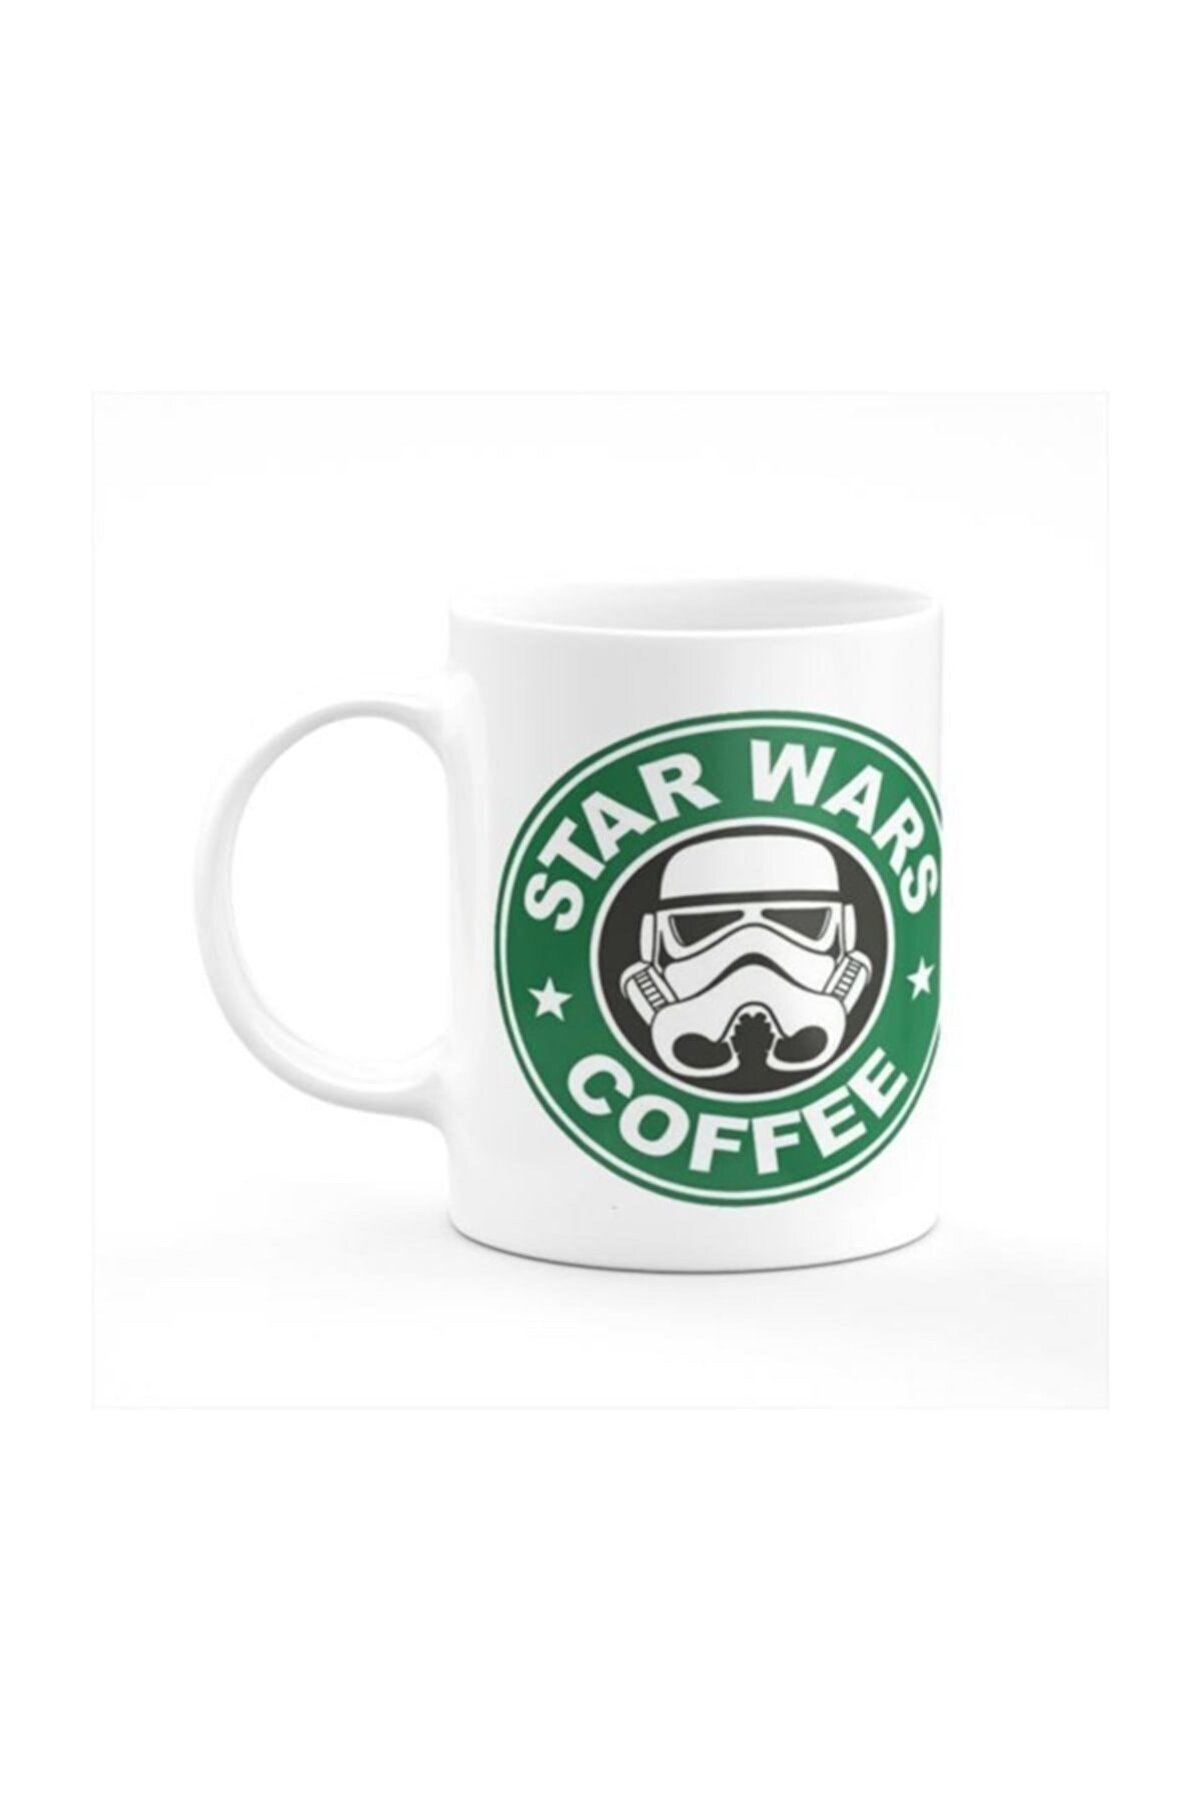 CupGel Star Wars Coffee Baskılı Kupa Bardak